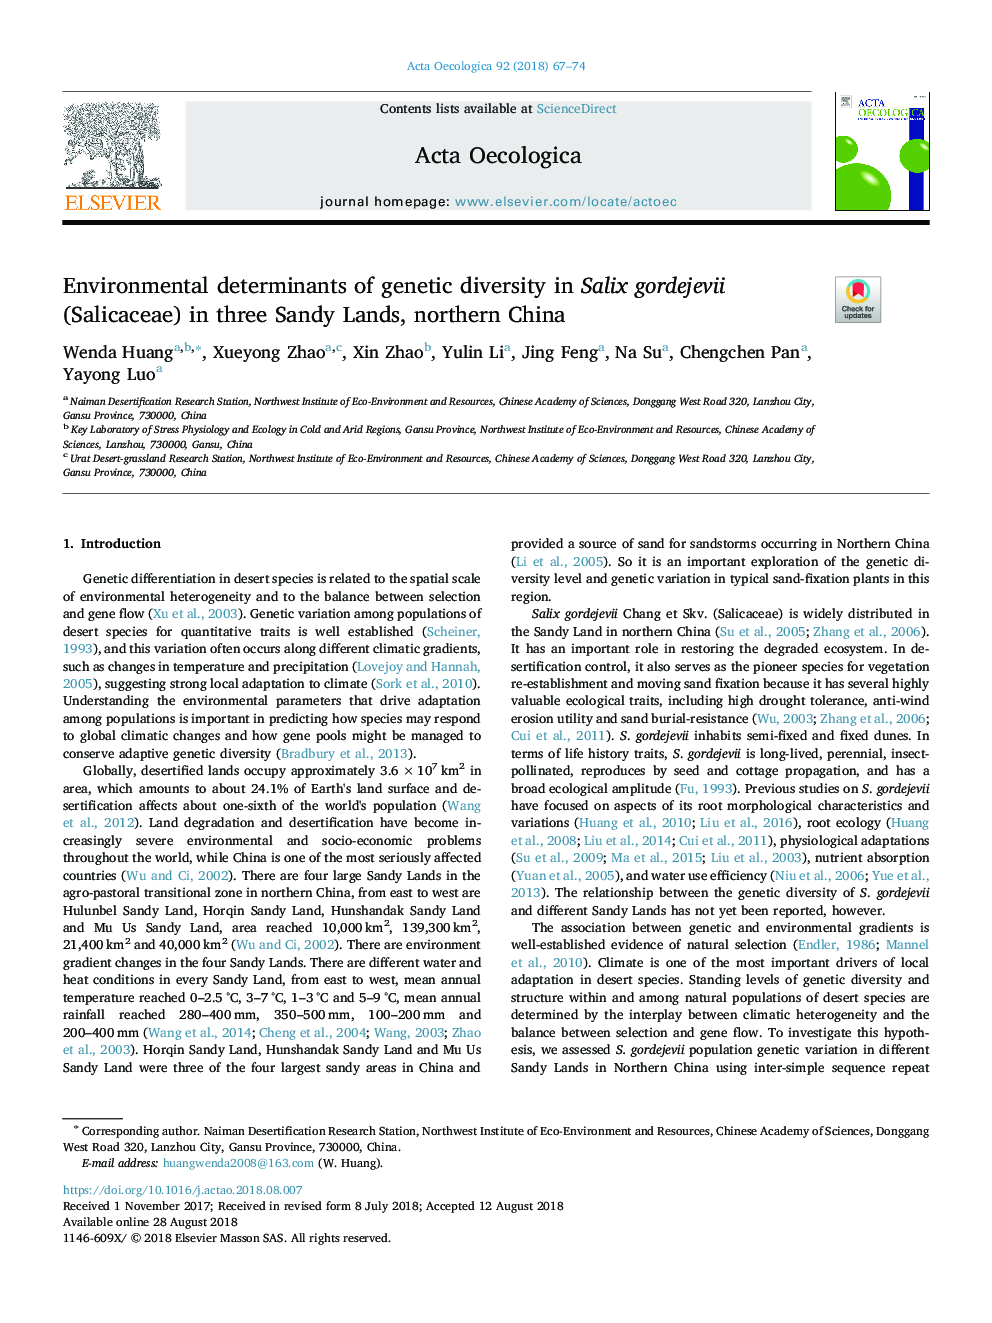 Environmental determinants of genetic diversity in Salix gordejevii (Salicaceae) in three Sandy Lands, northern China